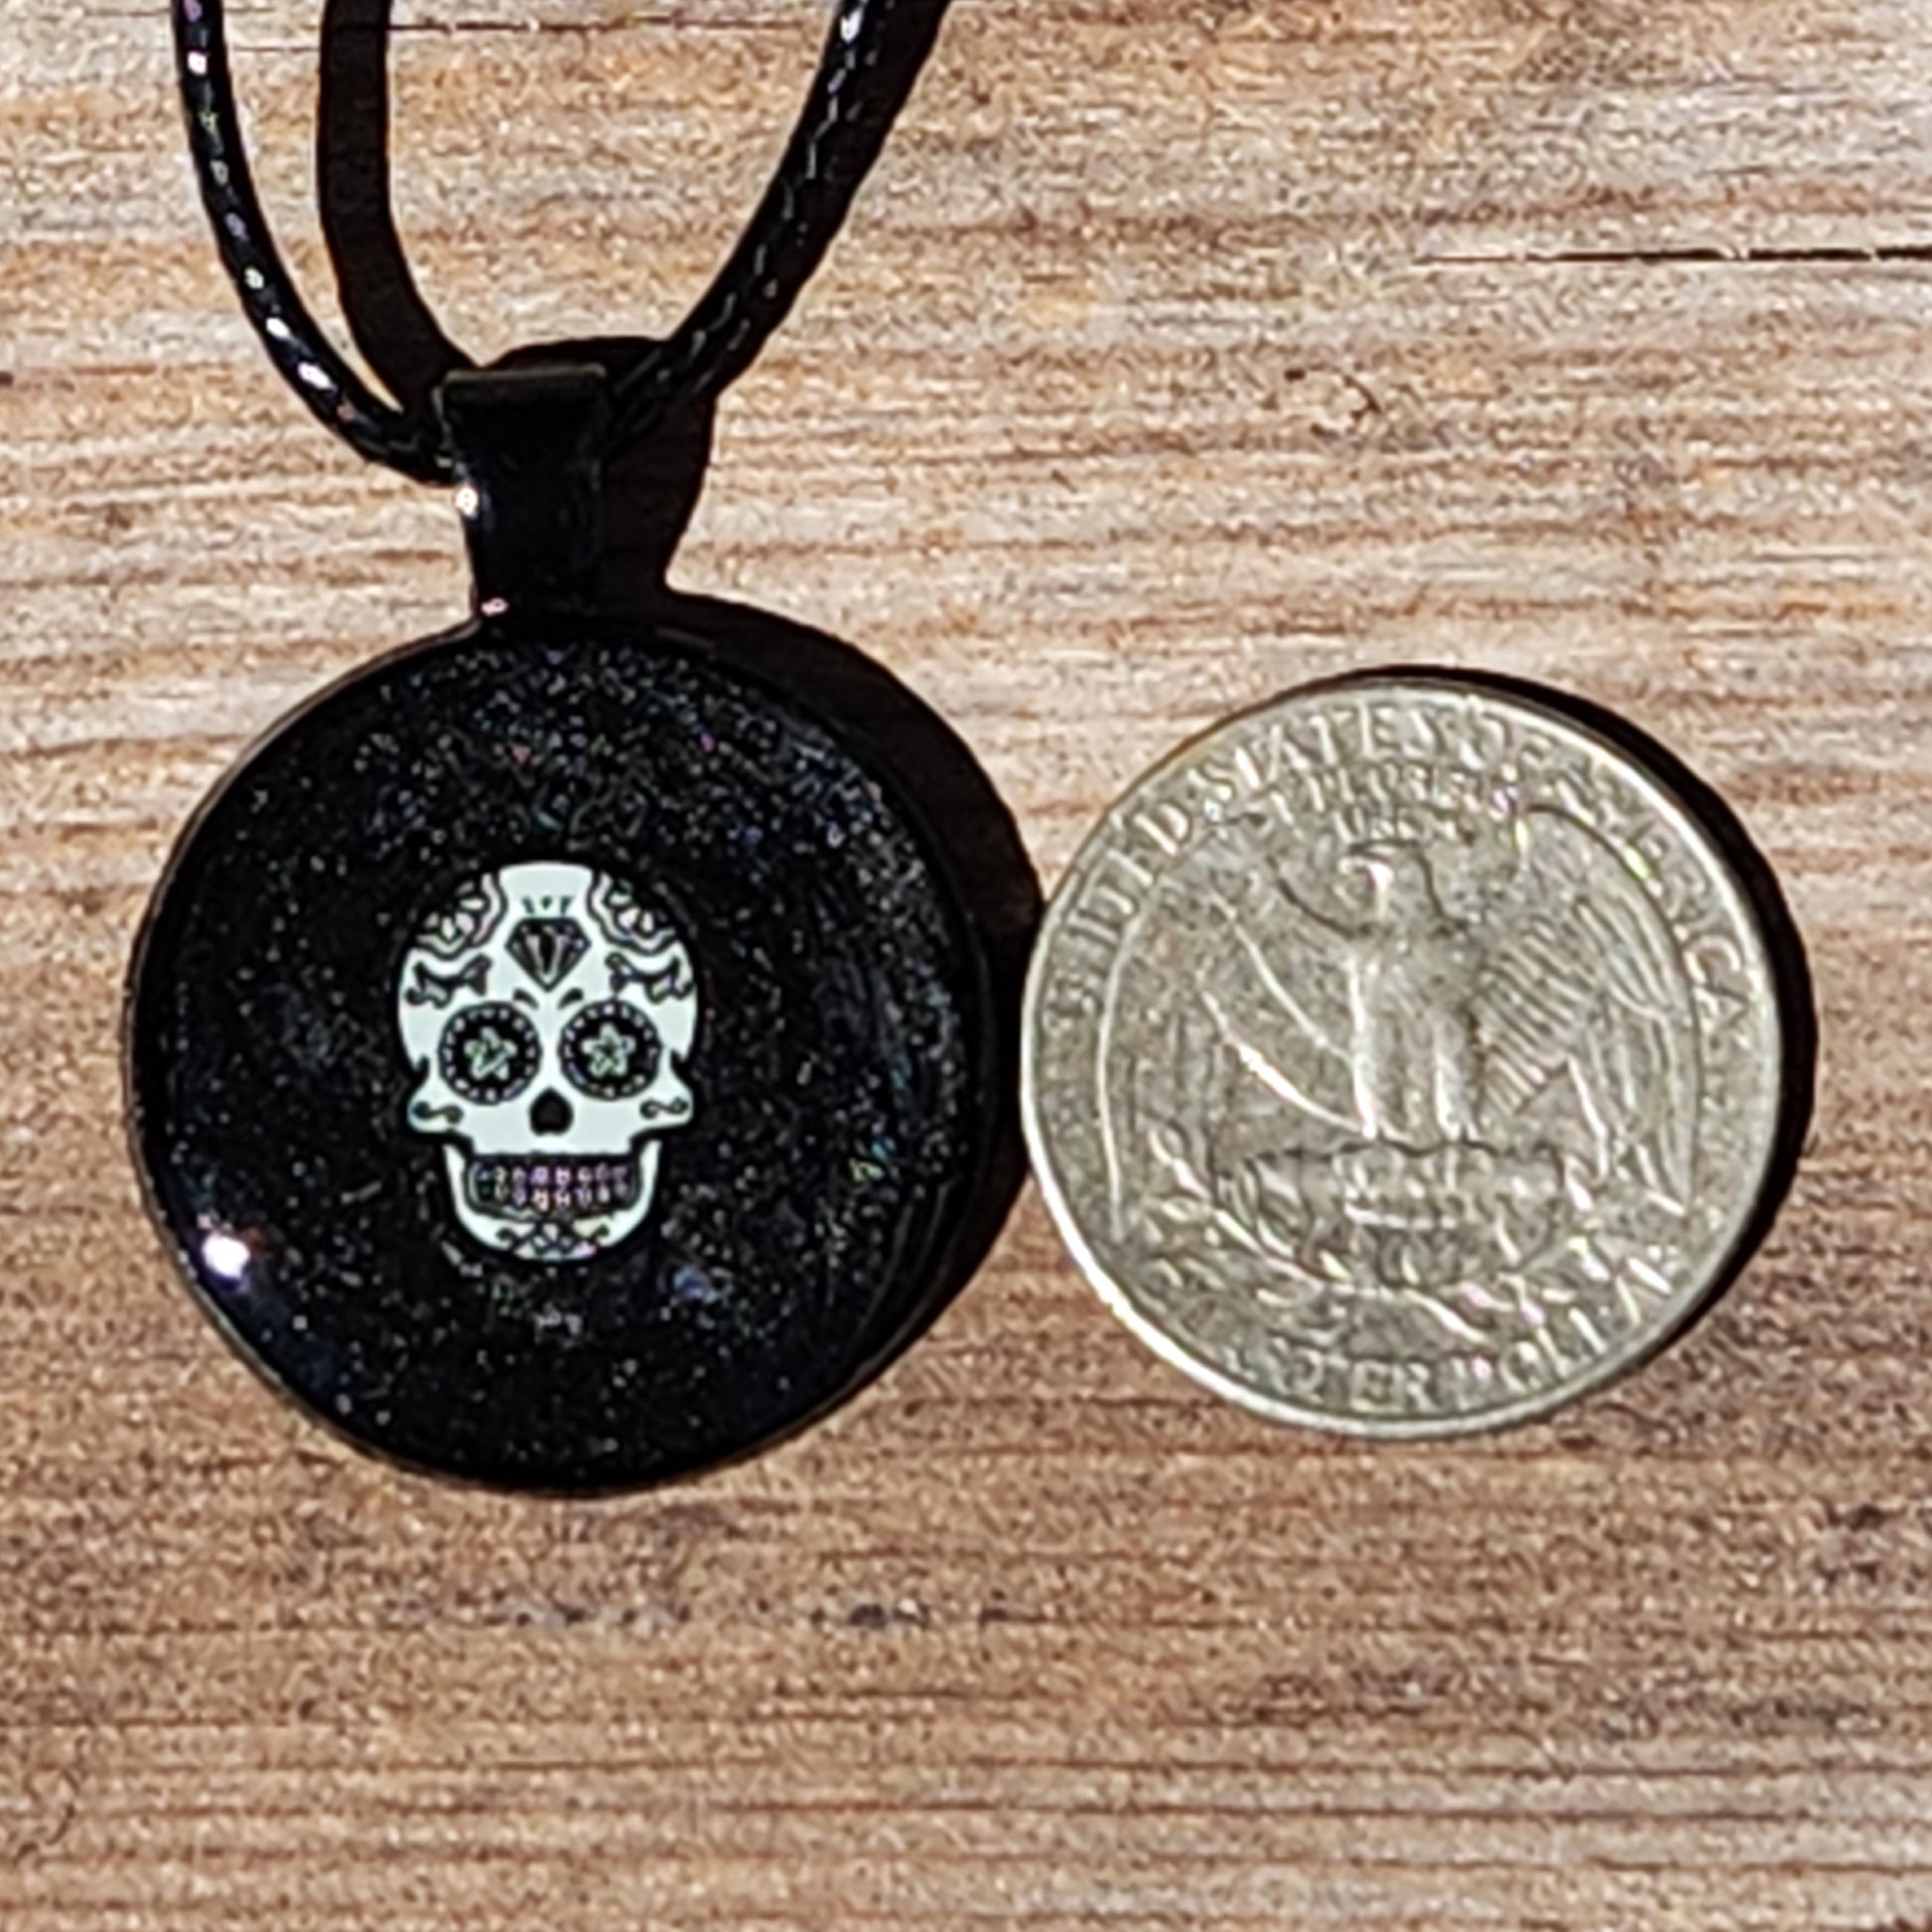 Handmade Resin Glow-in-the-Dark Skull Pendant Necklace DragonFireGlass